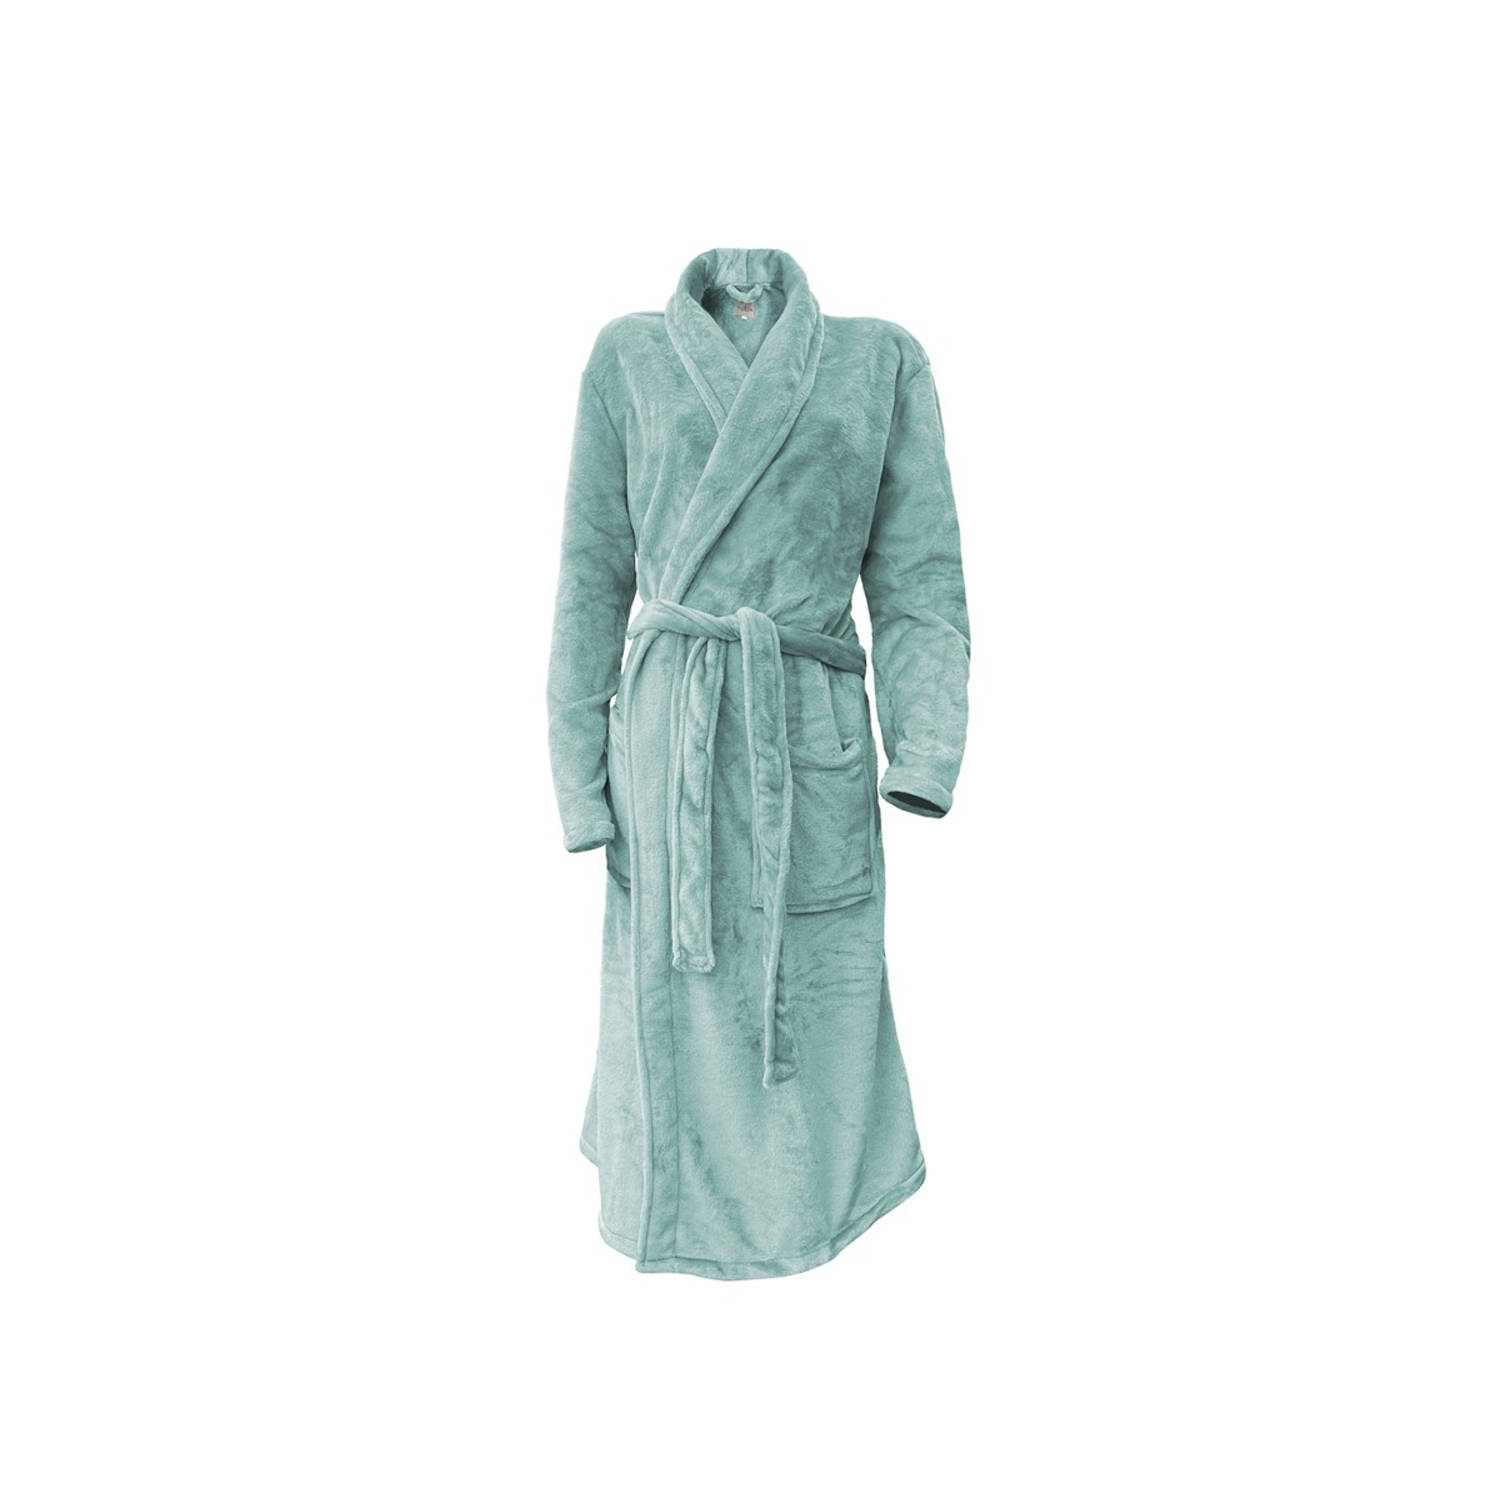 LINNICK Flanel Fleece Uni Badjas - Soft Green - XL - Badjas Dames - Badjas Heren